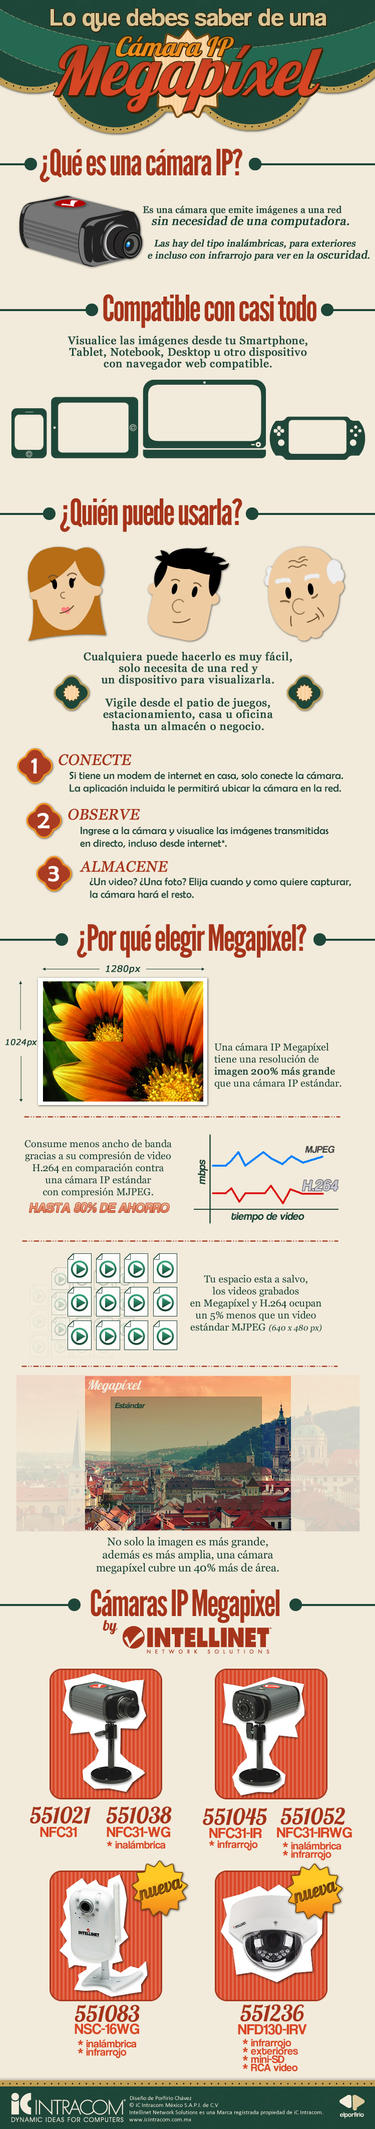 Infografia Camaras IP Megapixel by elporfirio on DeviantArt